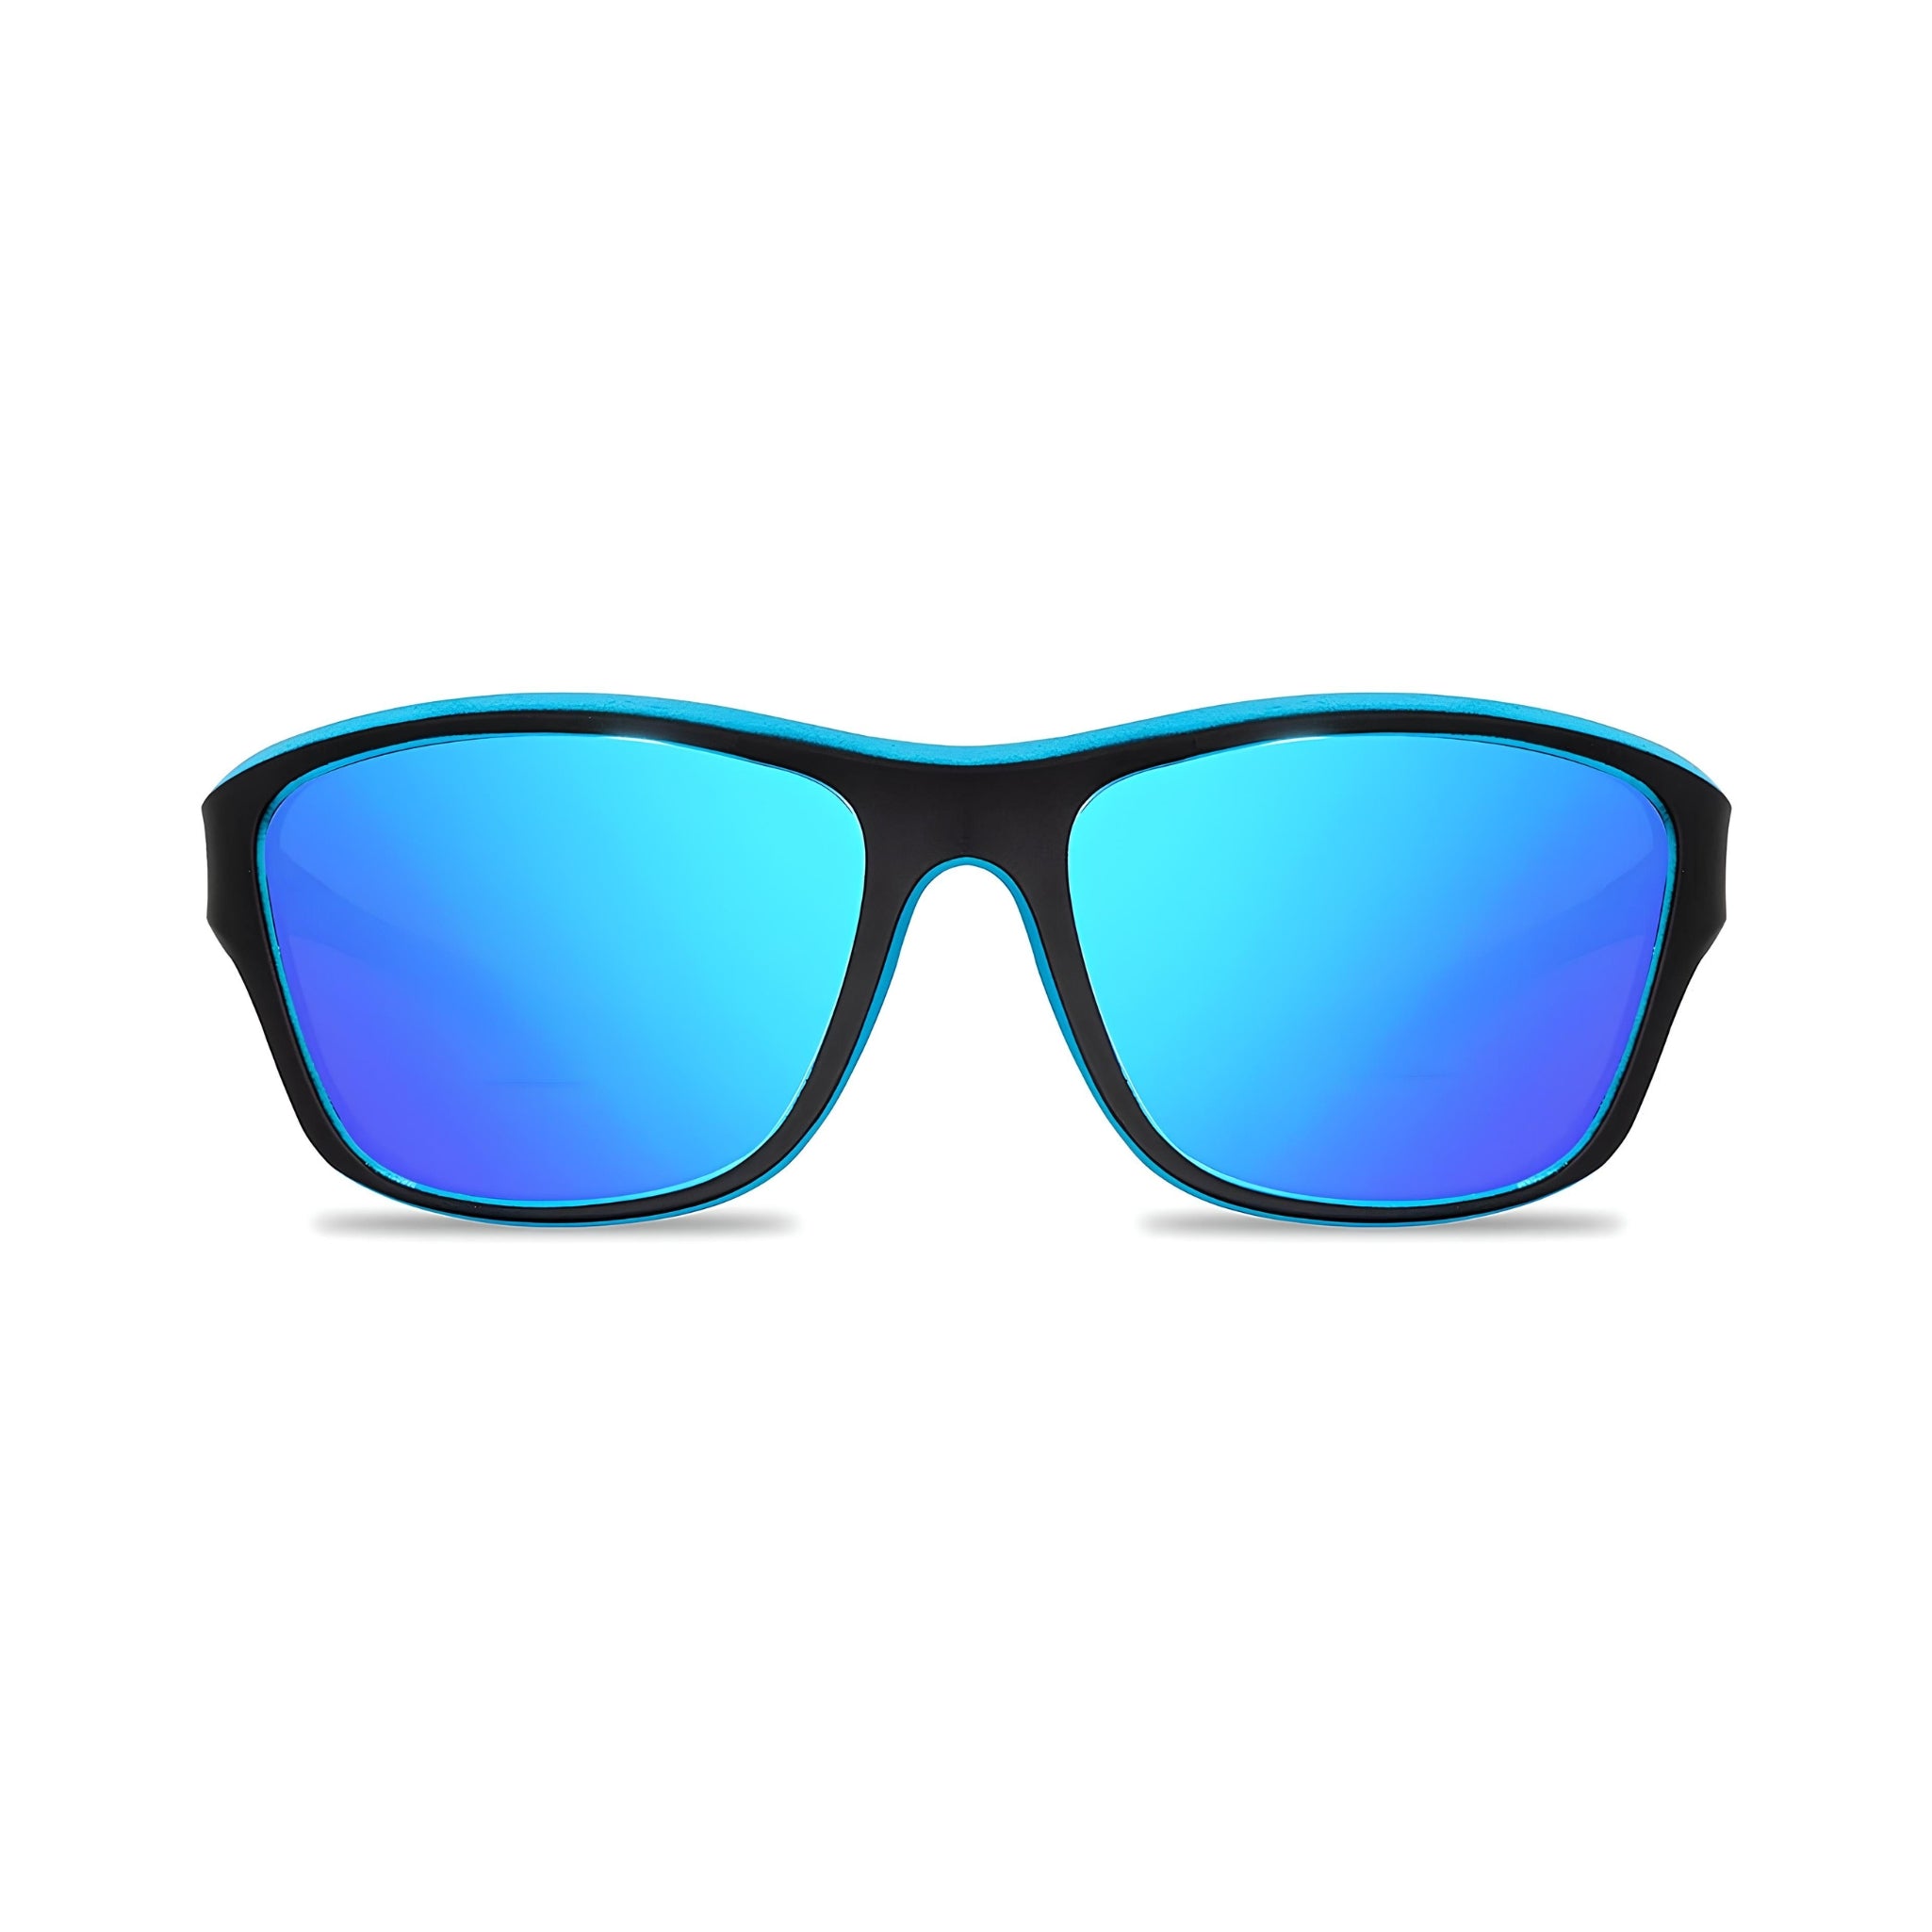 Xplorer Series Polarized Sports Sunglasses - Blue Mirrored